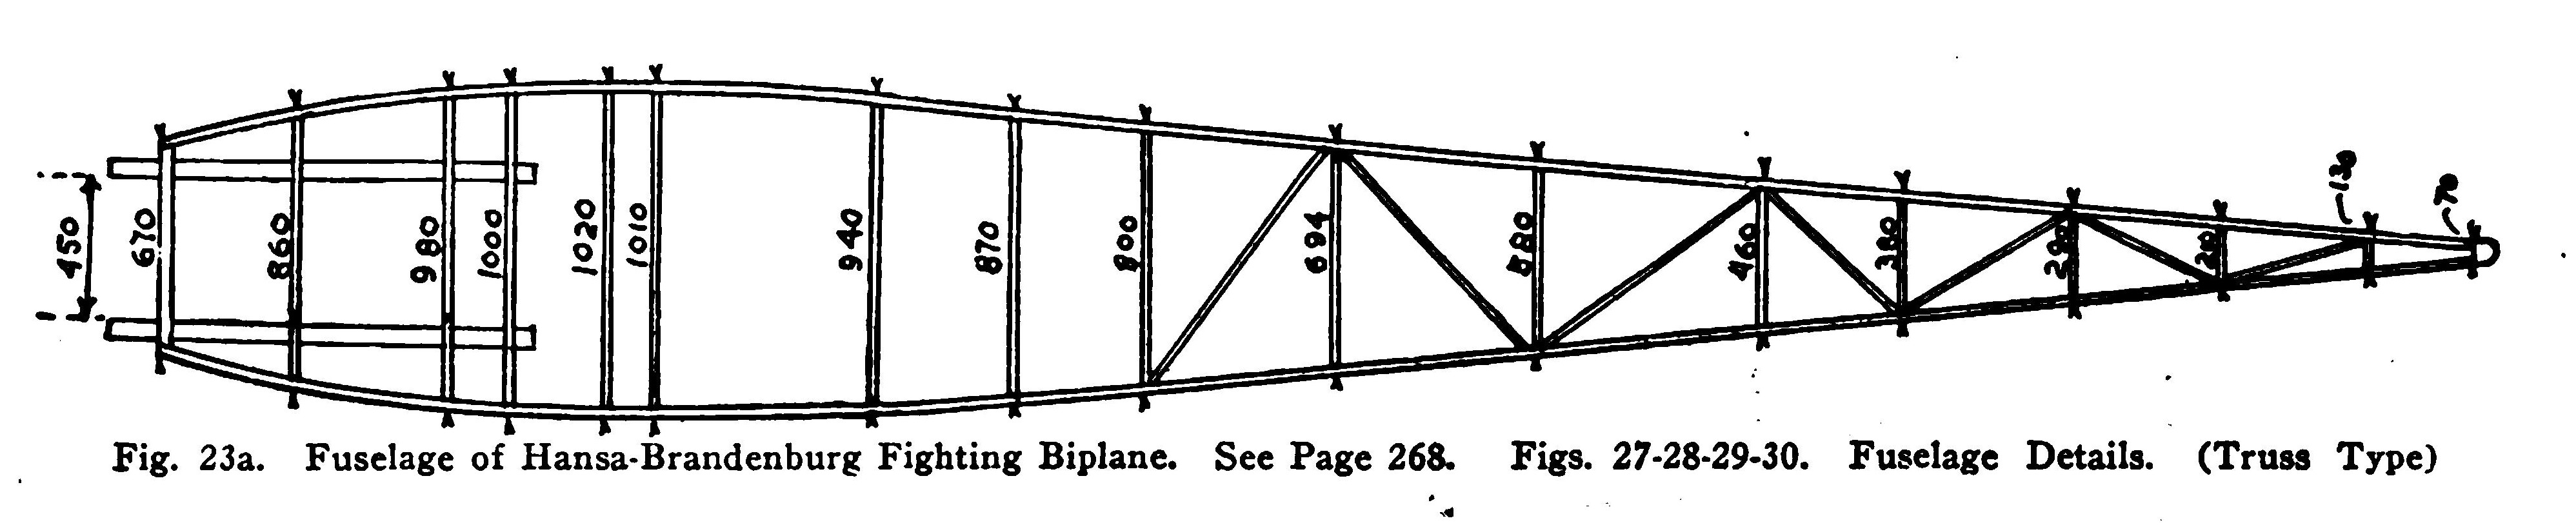 Fuselage of Hansa-Brandenburg Fighting Biplane. See Page 268. Figs. 27-28-29-30. Fuselage Details. (Truss Type)